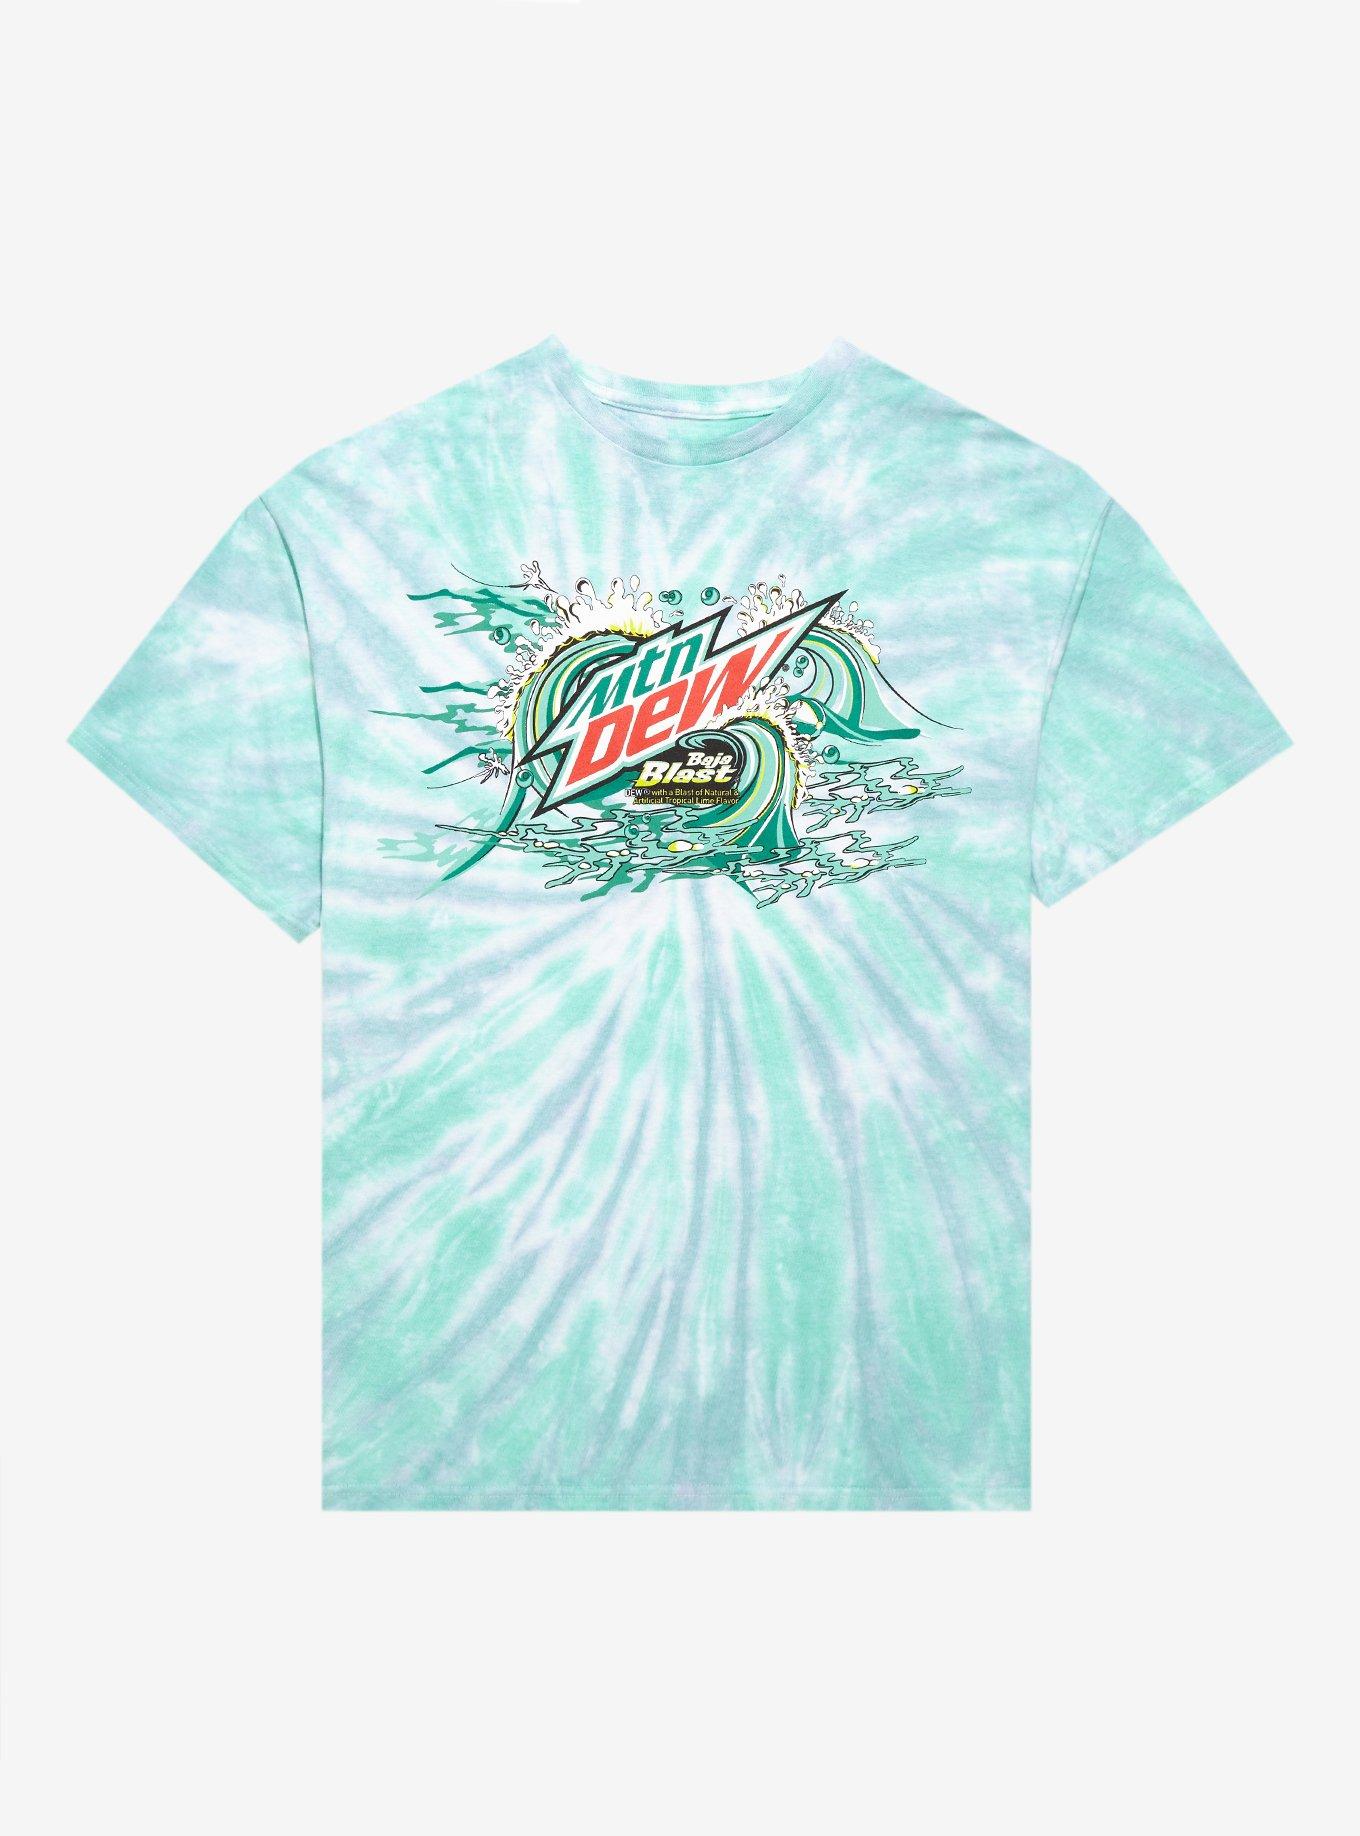 Mountain Dew Baja Blast Tie-Dye T-Shirt | Hot Topic